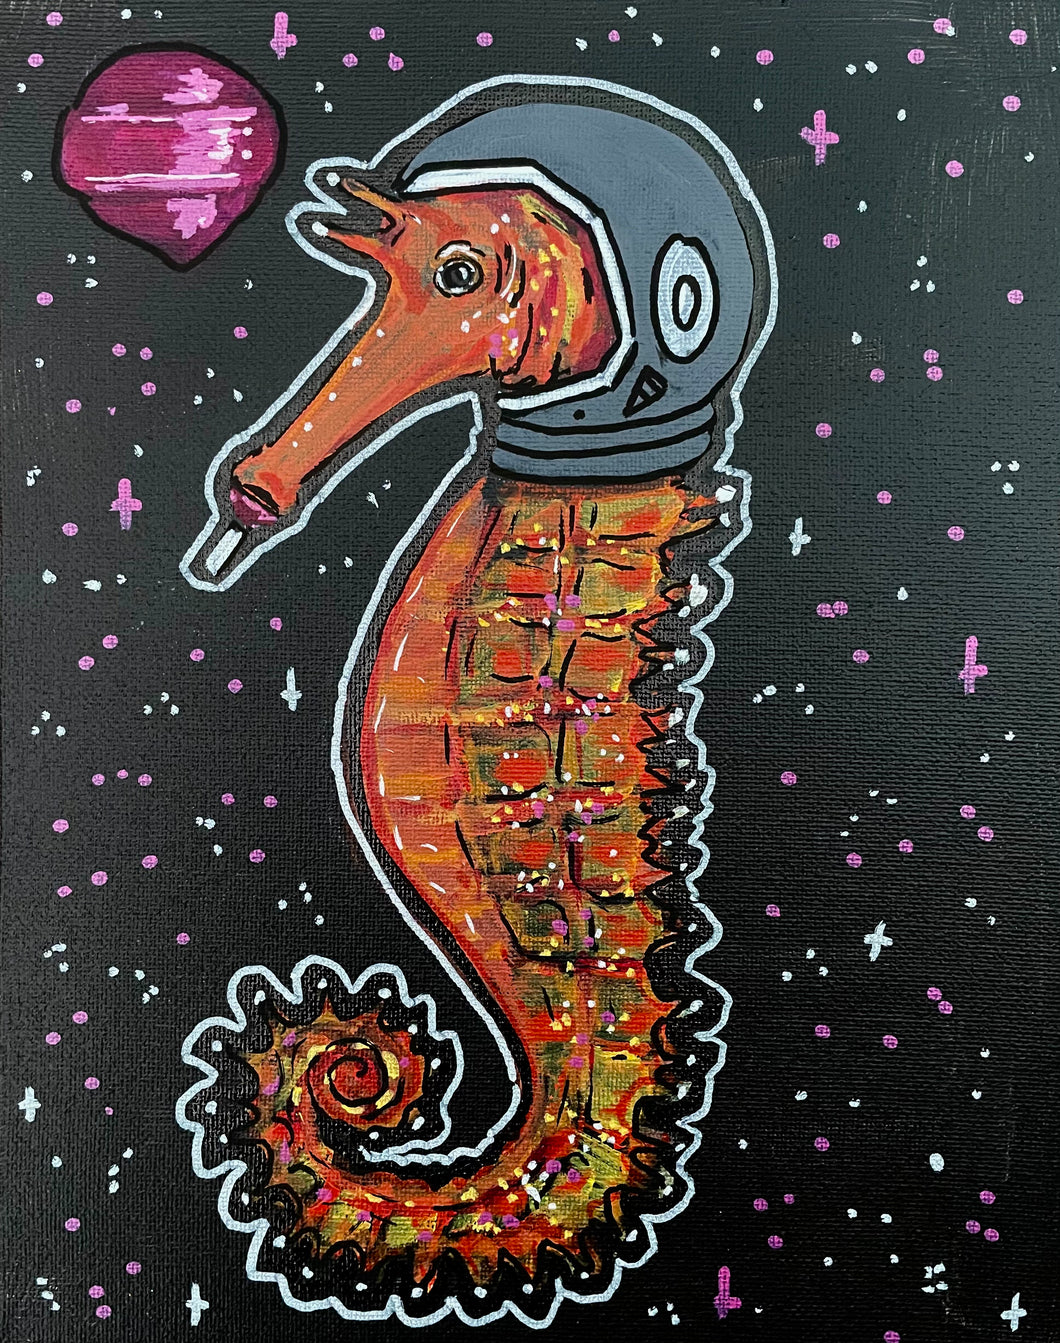 Space seahorse